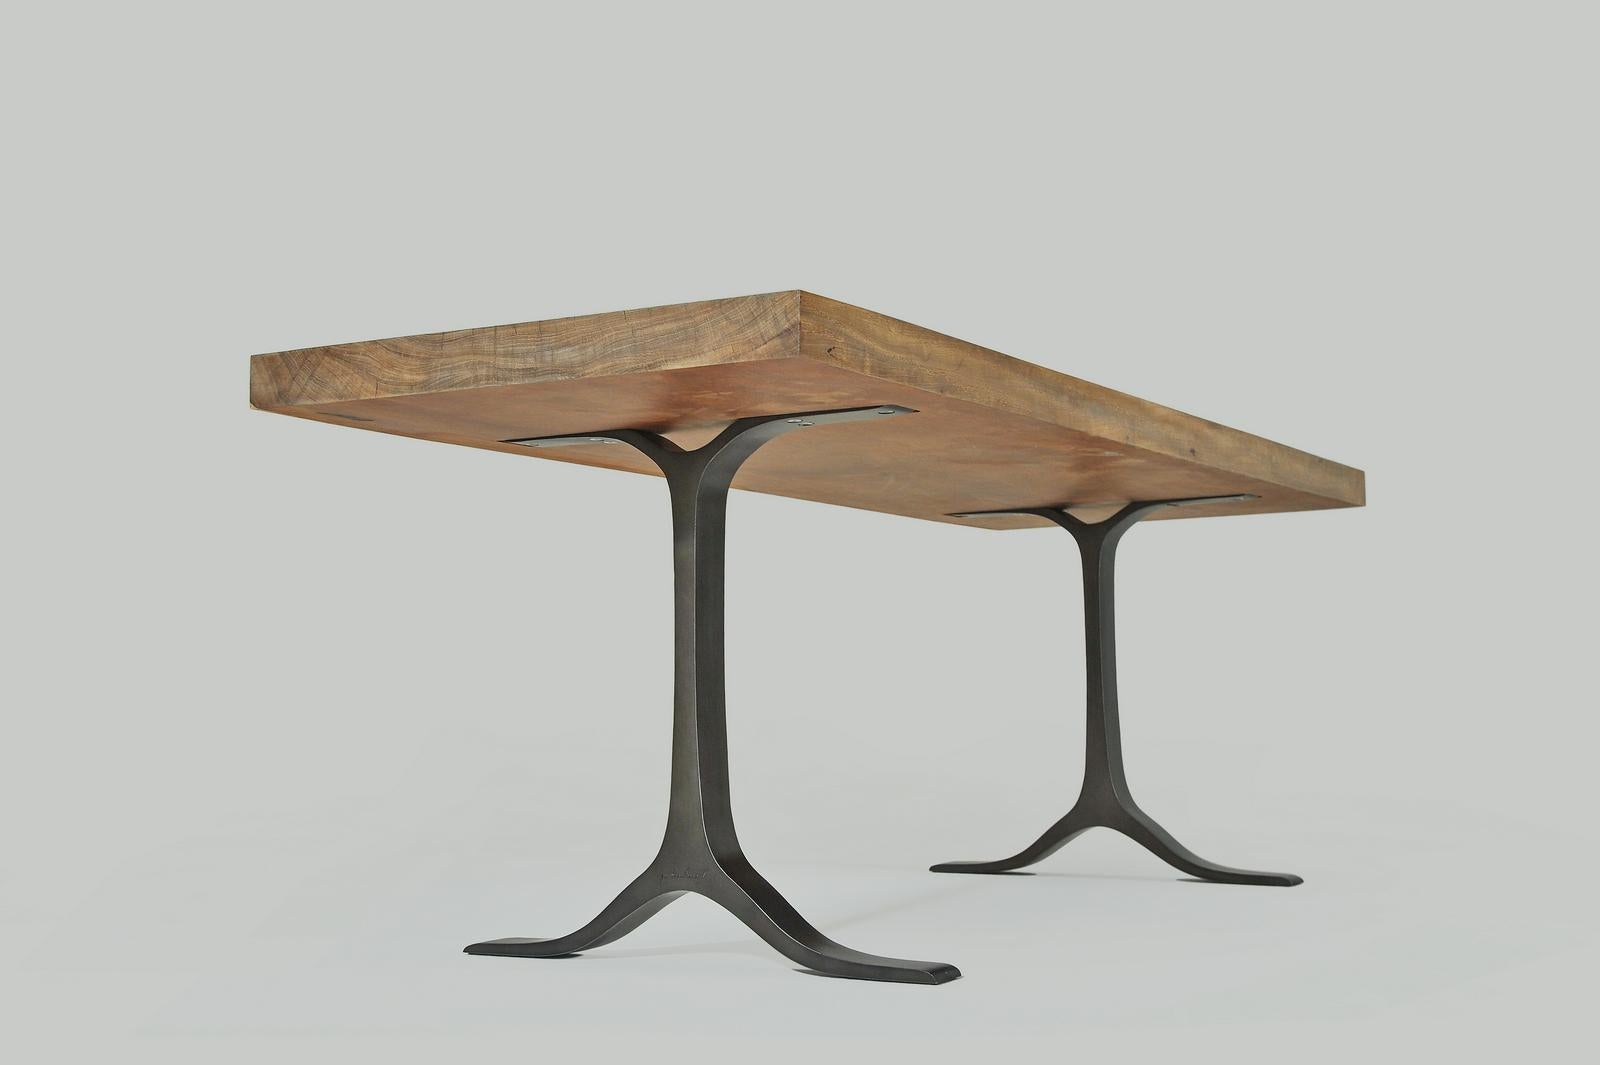 Minimalist Bespoke Table, Antique Hardwood, Sand cast Aluminum Base by P. Tendercool For Sale